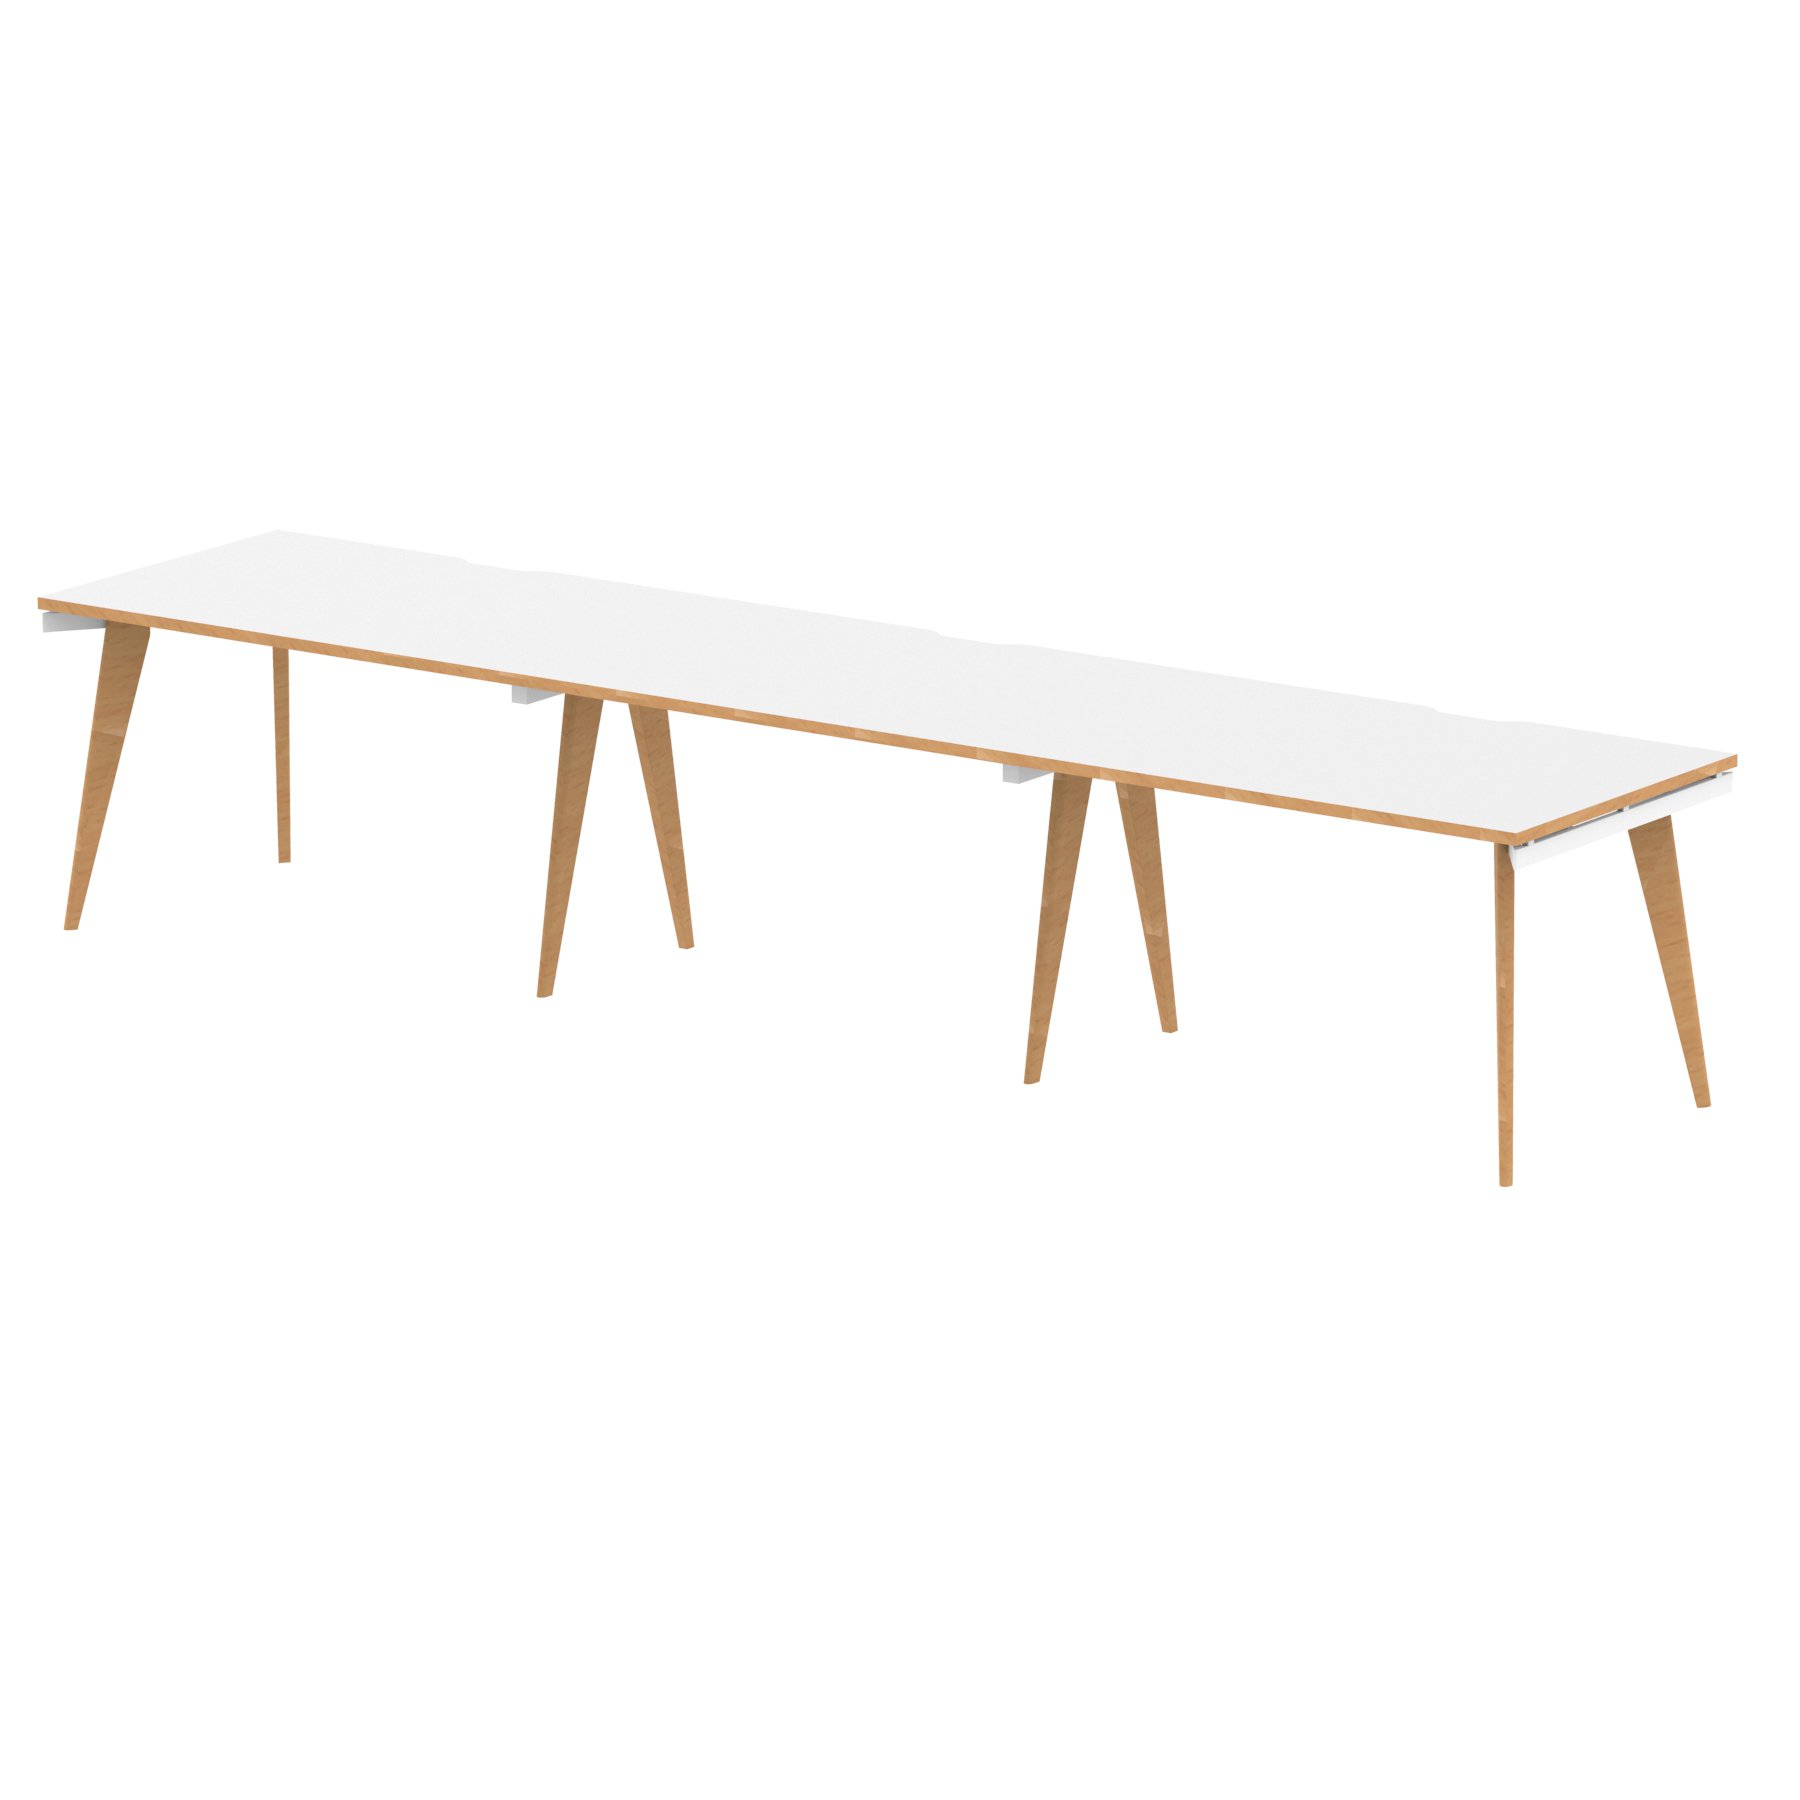 Rectangular Desks Oslo 1200mm Single Row 3 Person Desk White Top Natural Wood Edge White Frame OSL0118